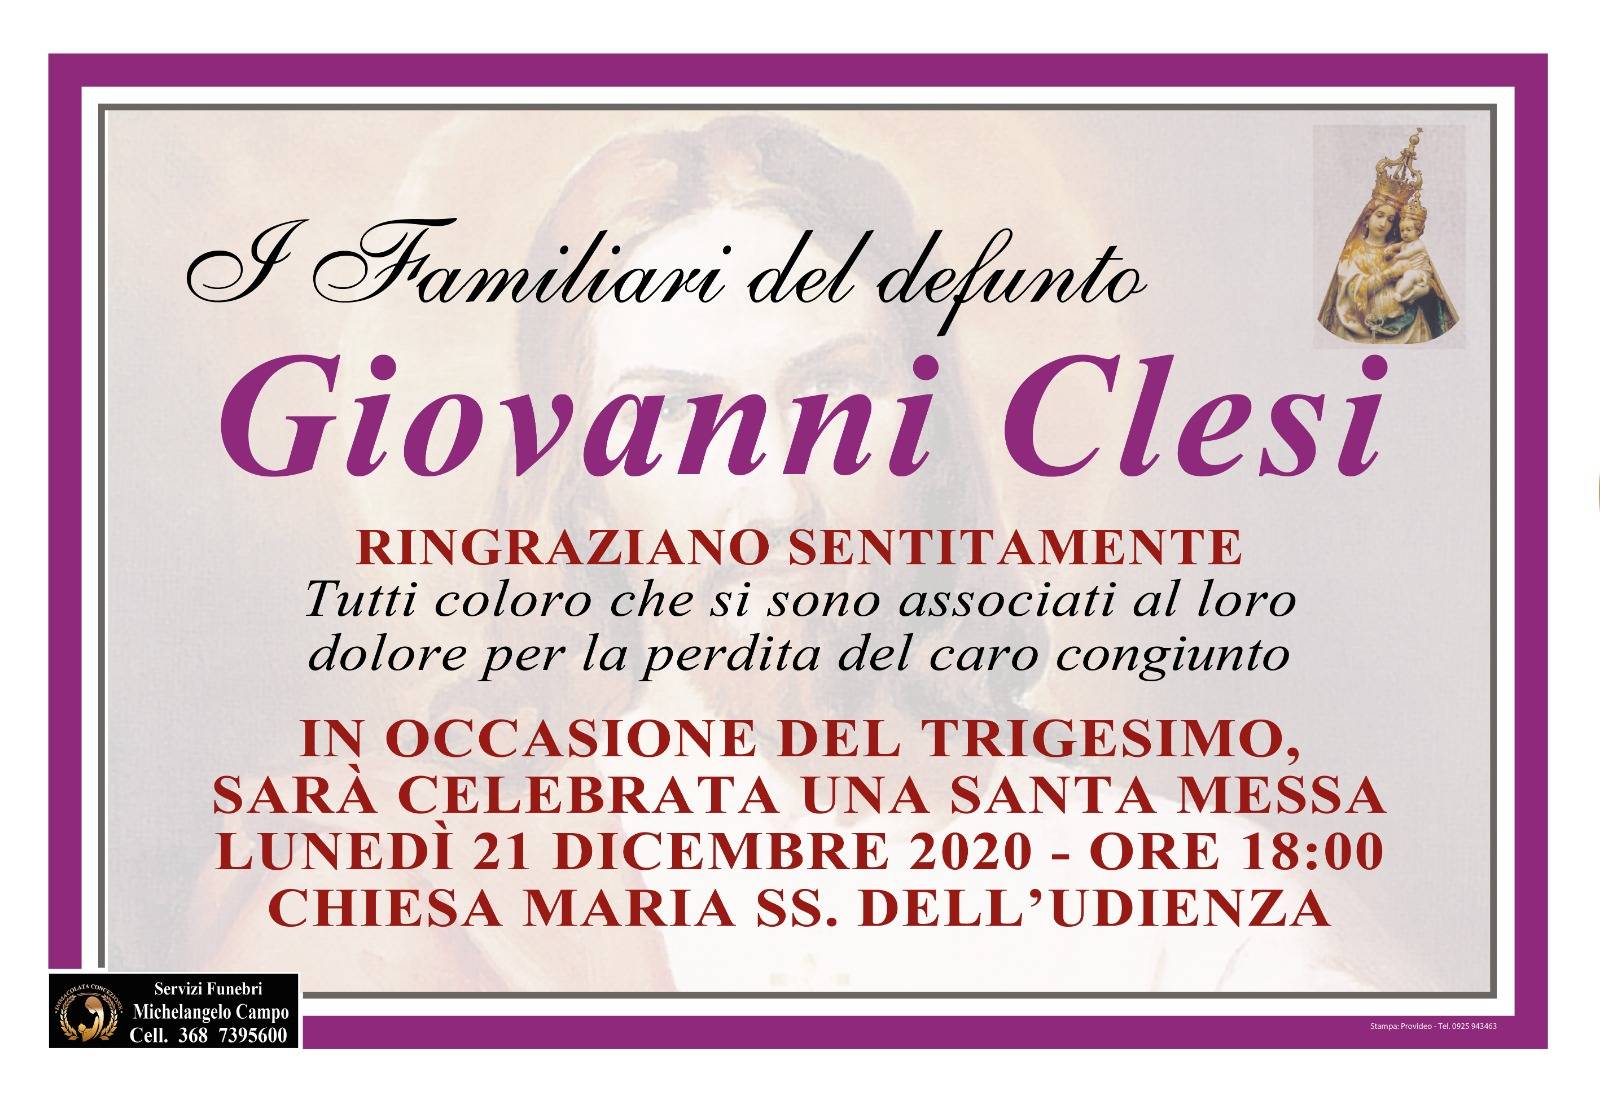 Giovanni Clesi